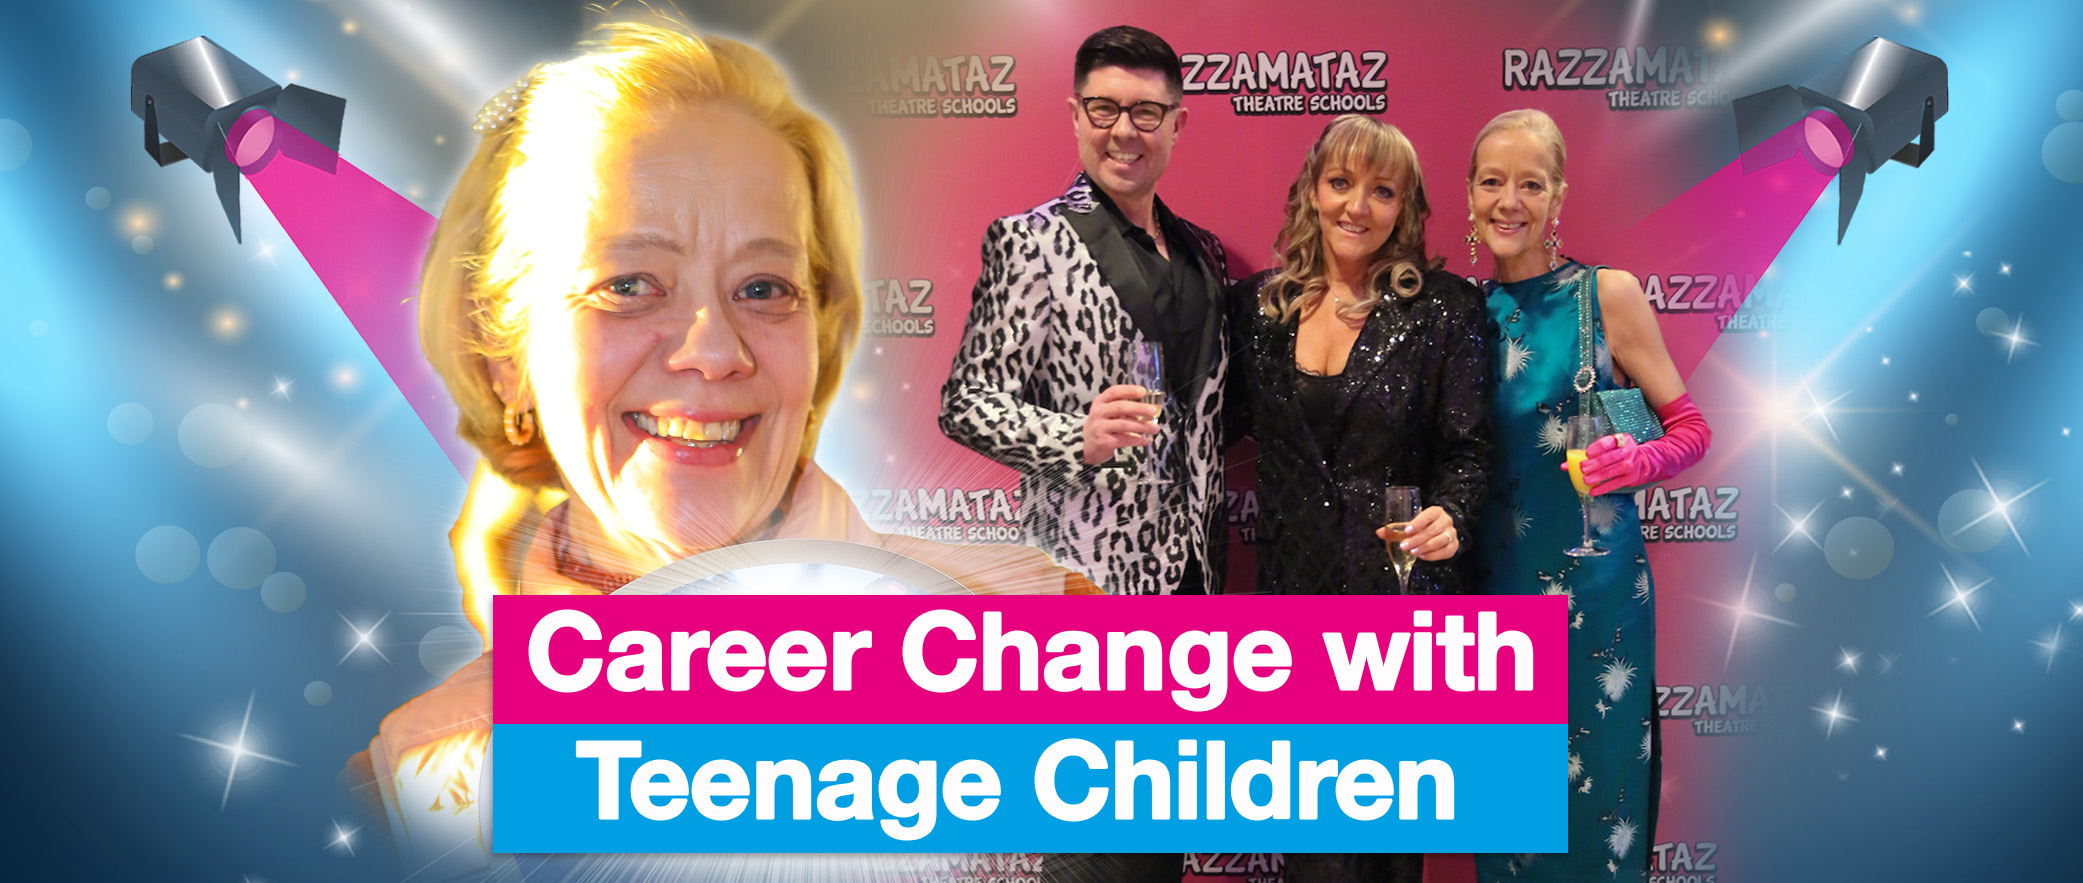 Career Change with Teenage Children